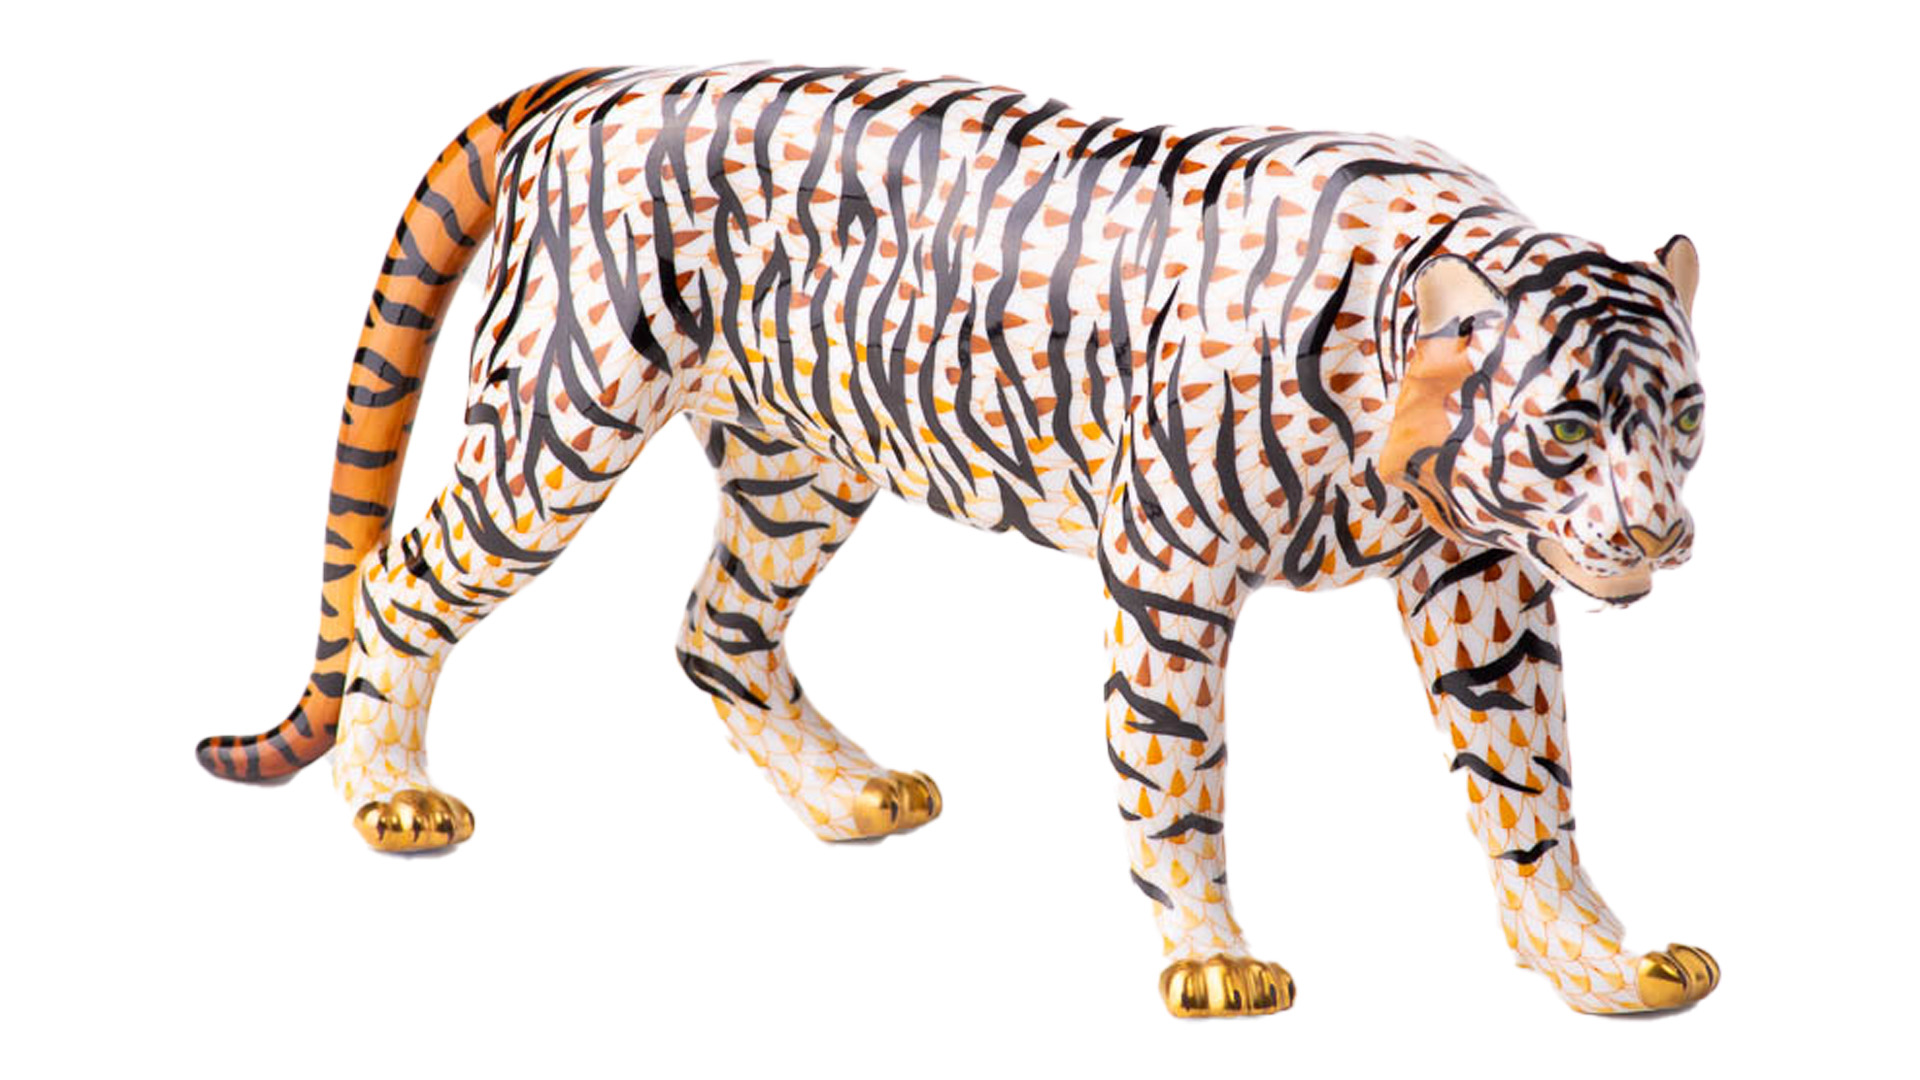 Фигурка Herend Суматранский тигр 13см, фарфор